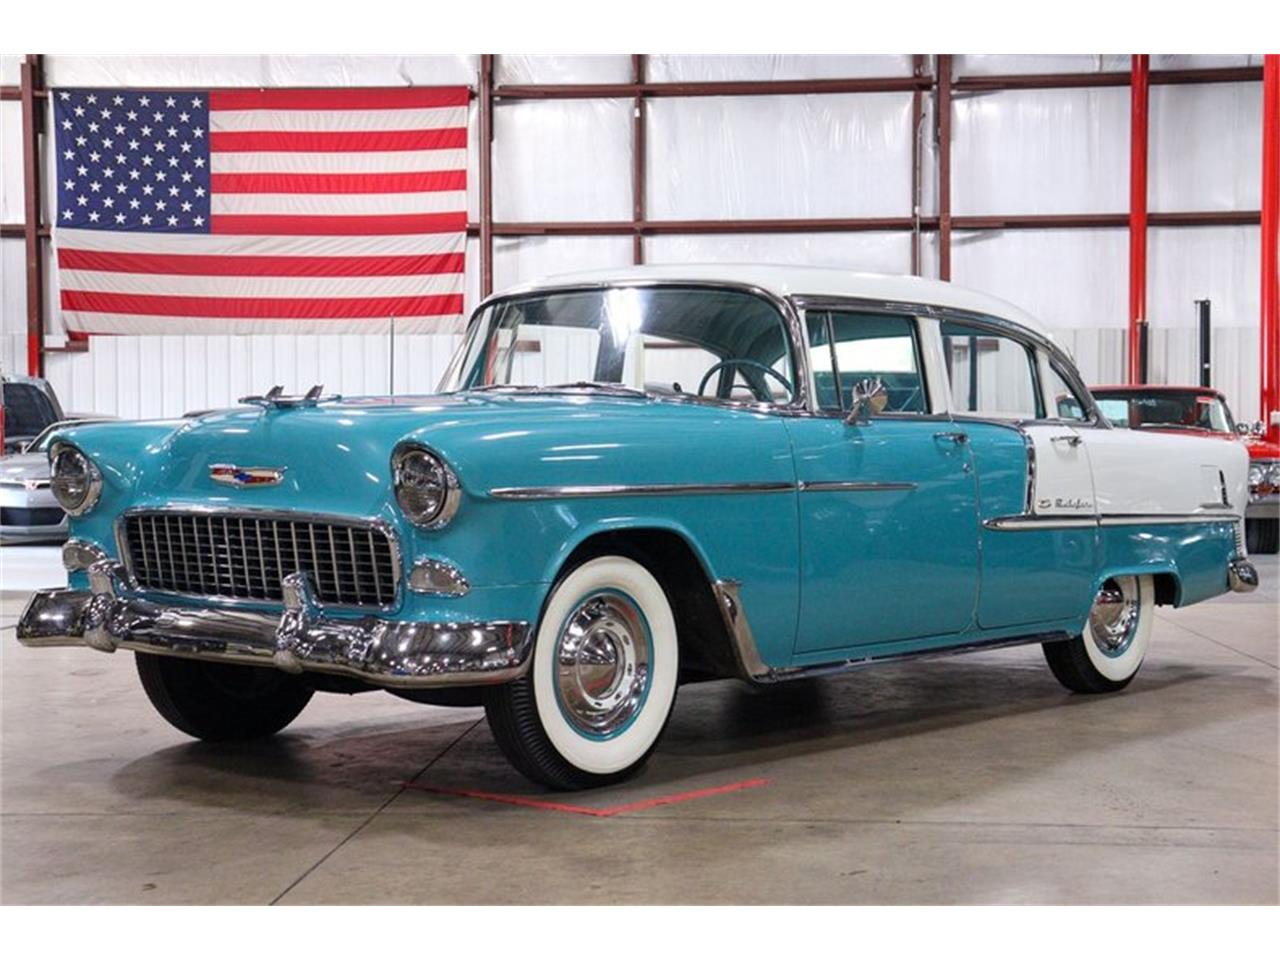 For Sale: 1955 Chevrolet Bel Air in Ken2od, Michigan for sale in Grand Rapids, MI